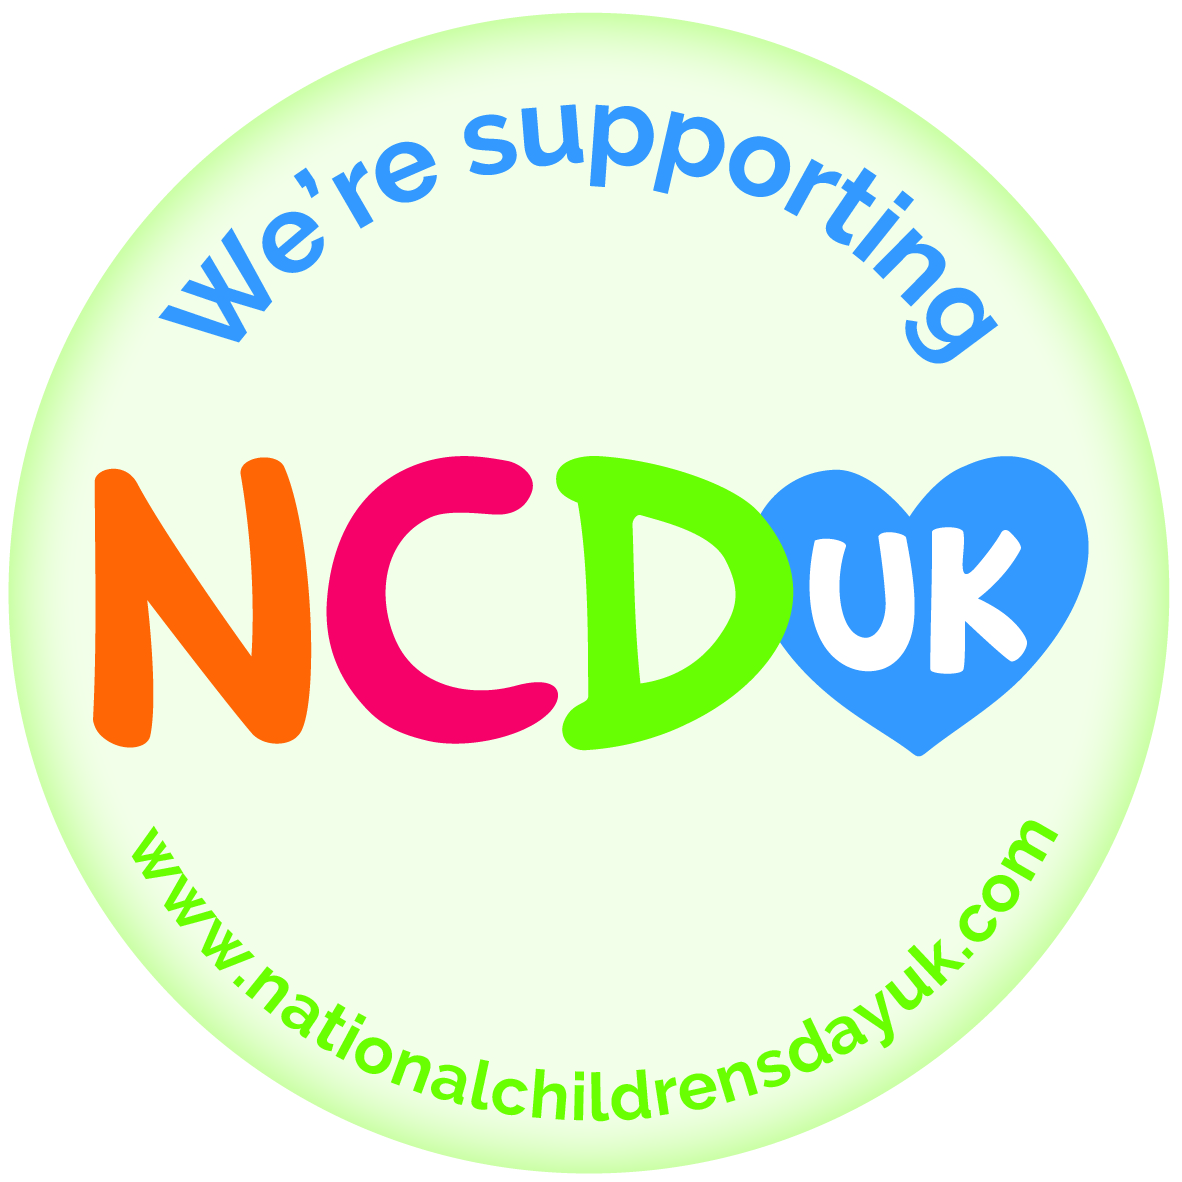 Happy National Children's Day UK!